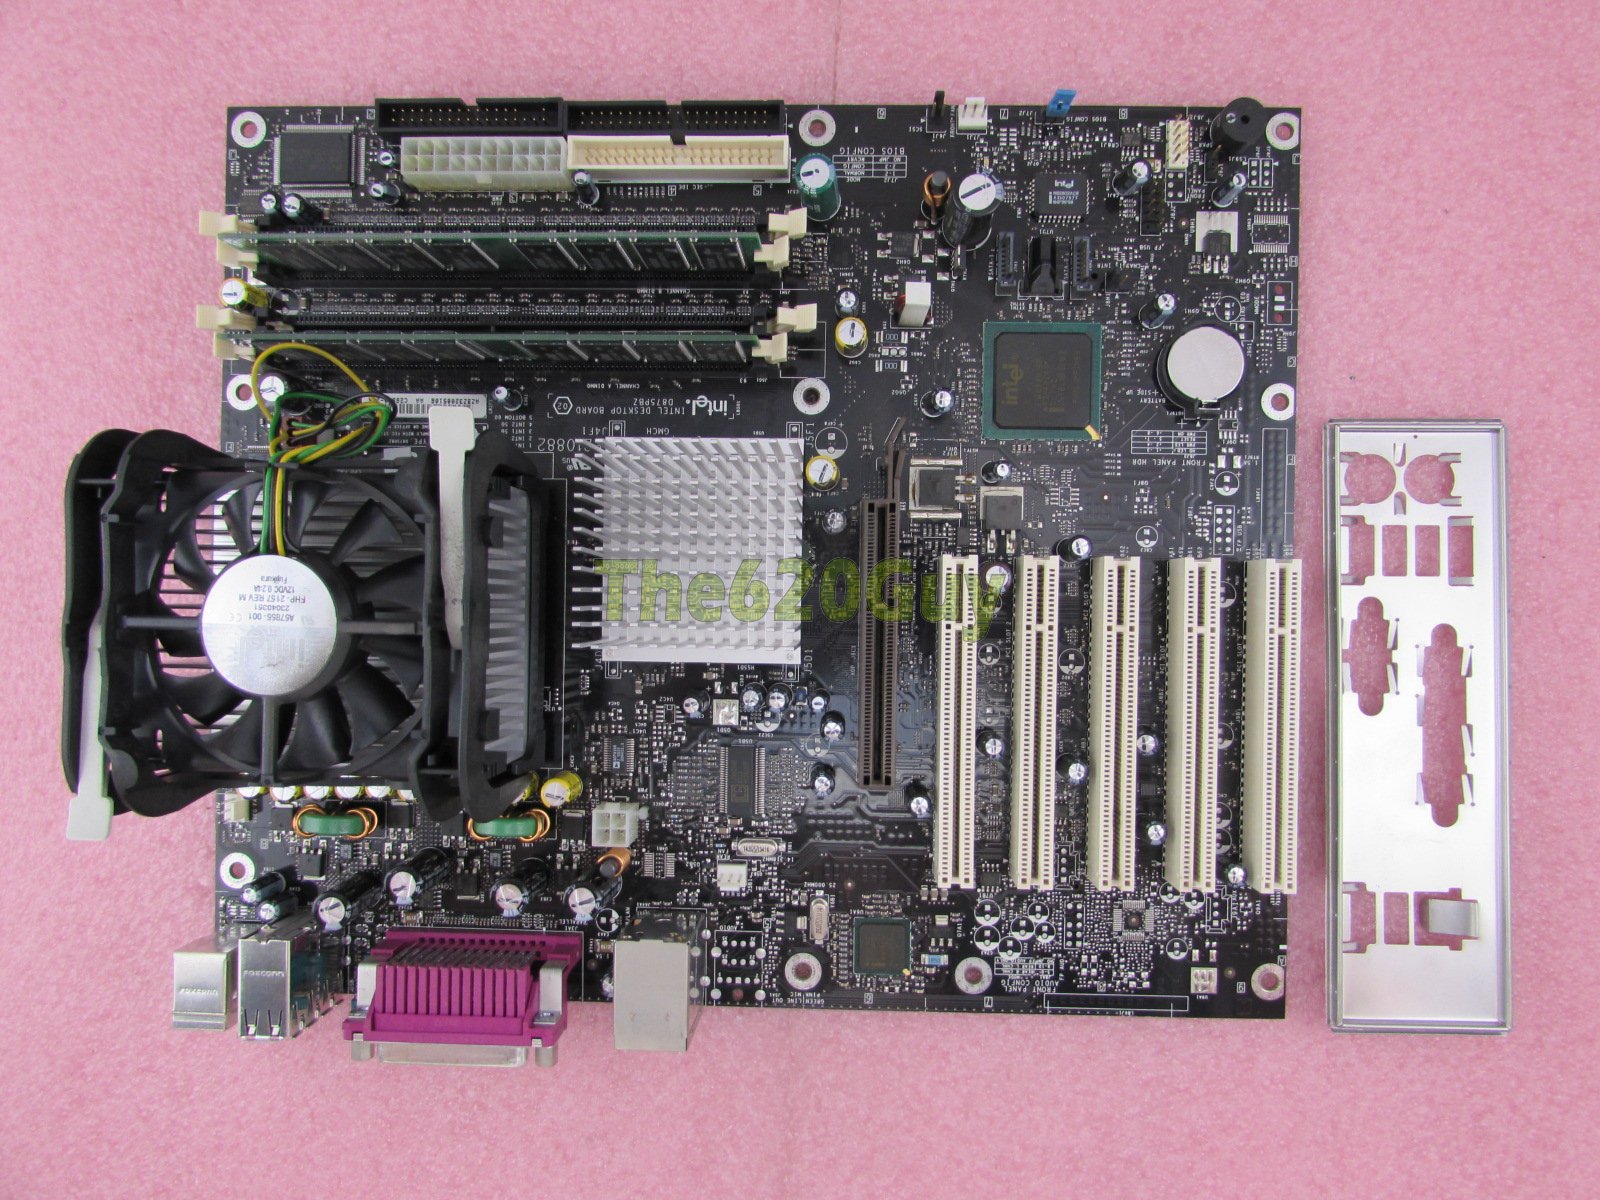 Intel D875PBZ Black Motherboard + Pentium 4 2.6GHz CPU + 1GB RAM + HSF